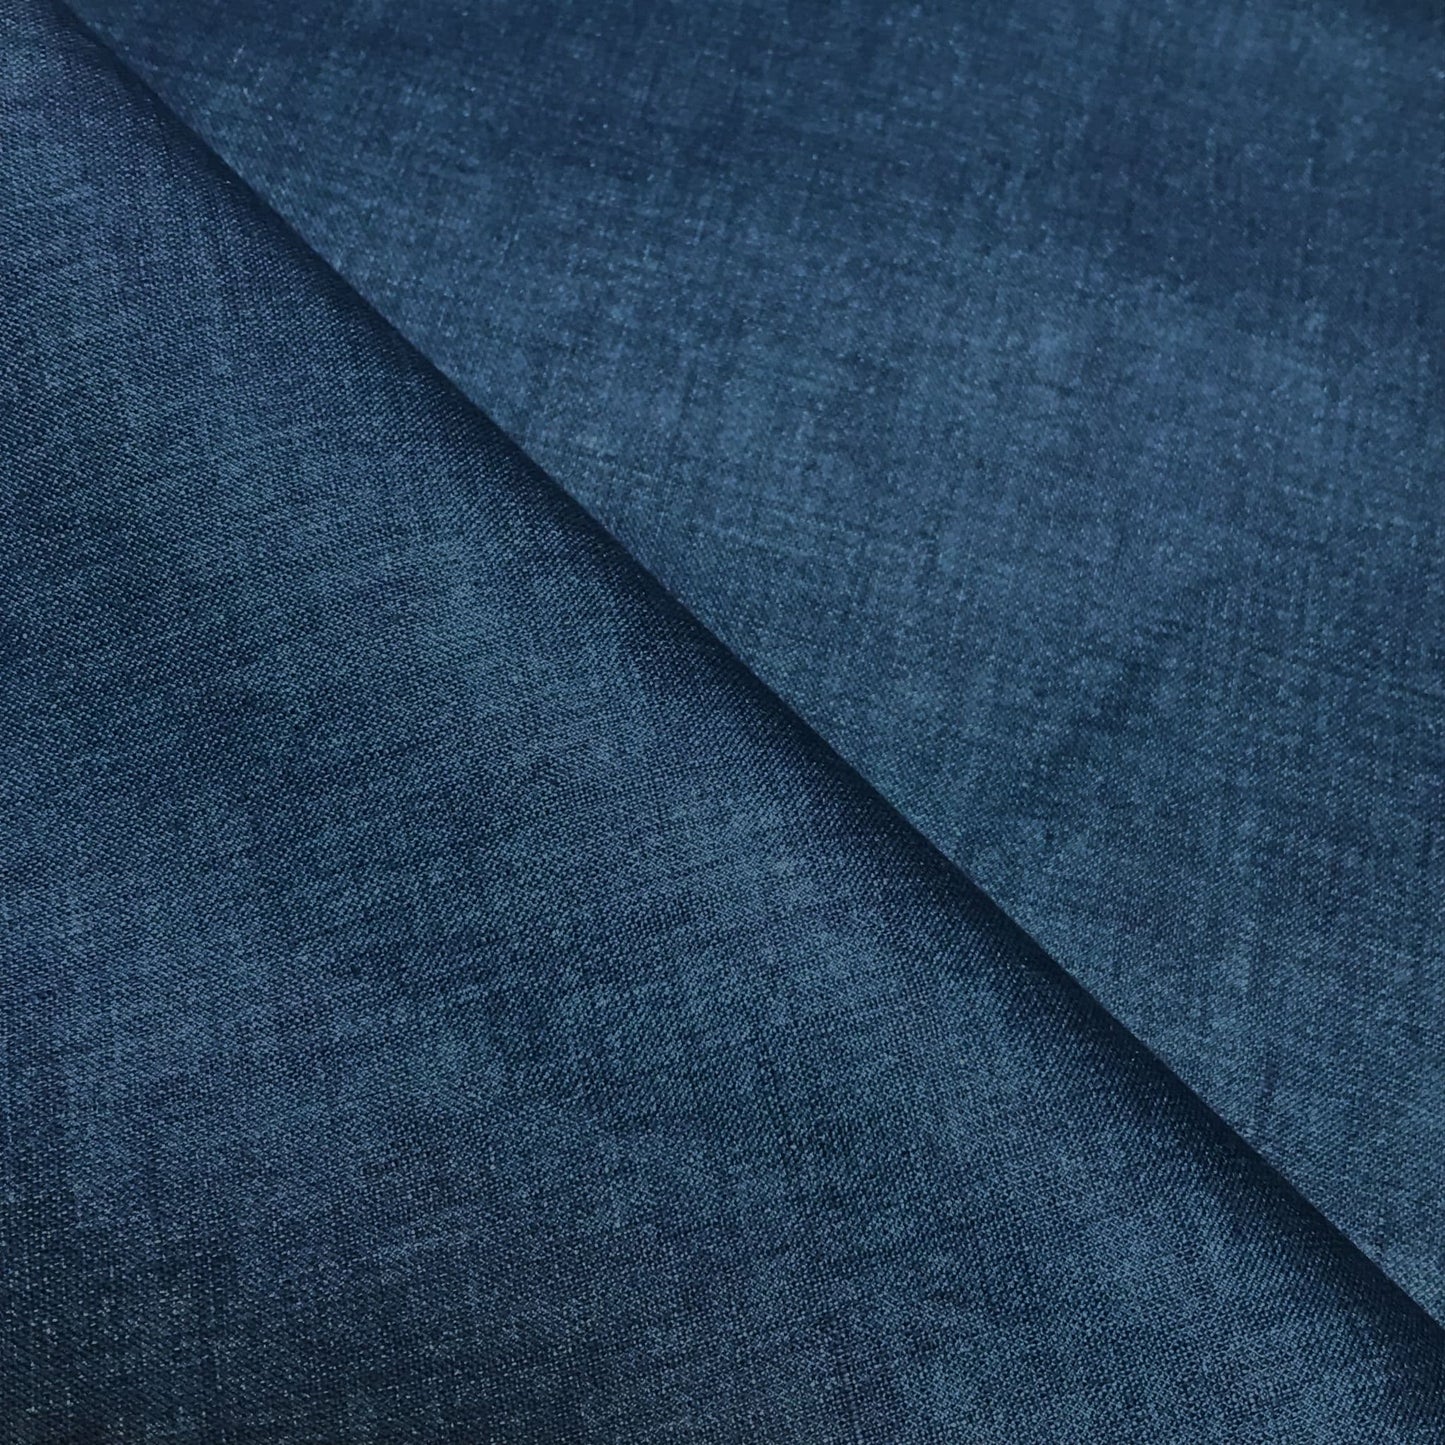 PU Backed Storm System Linen - Denim Blue 57" Wide Fabric